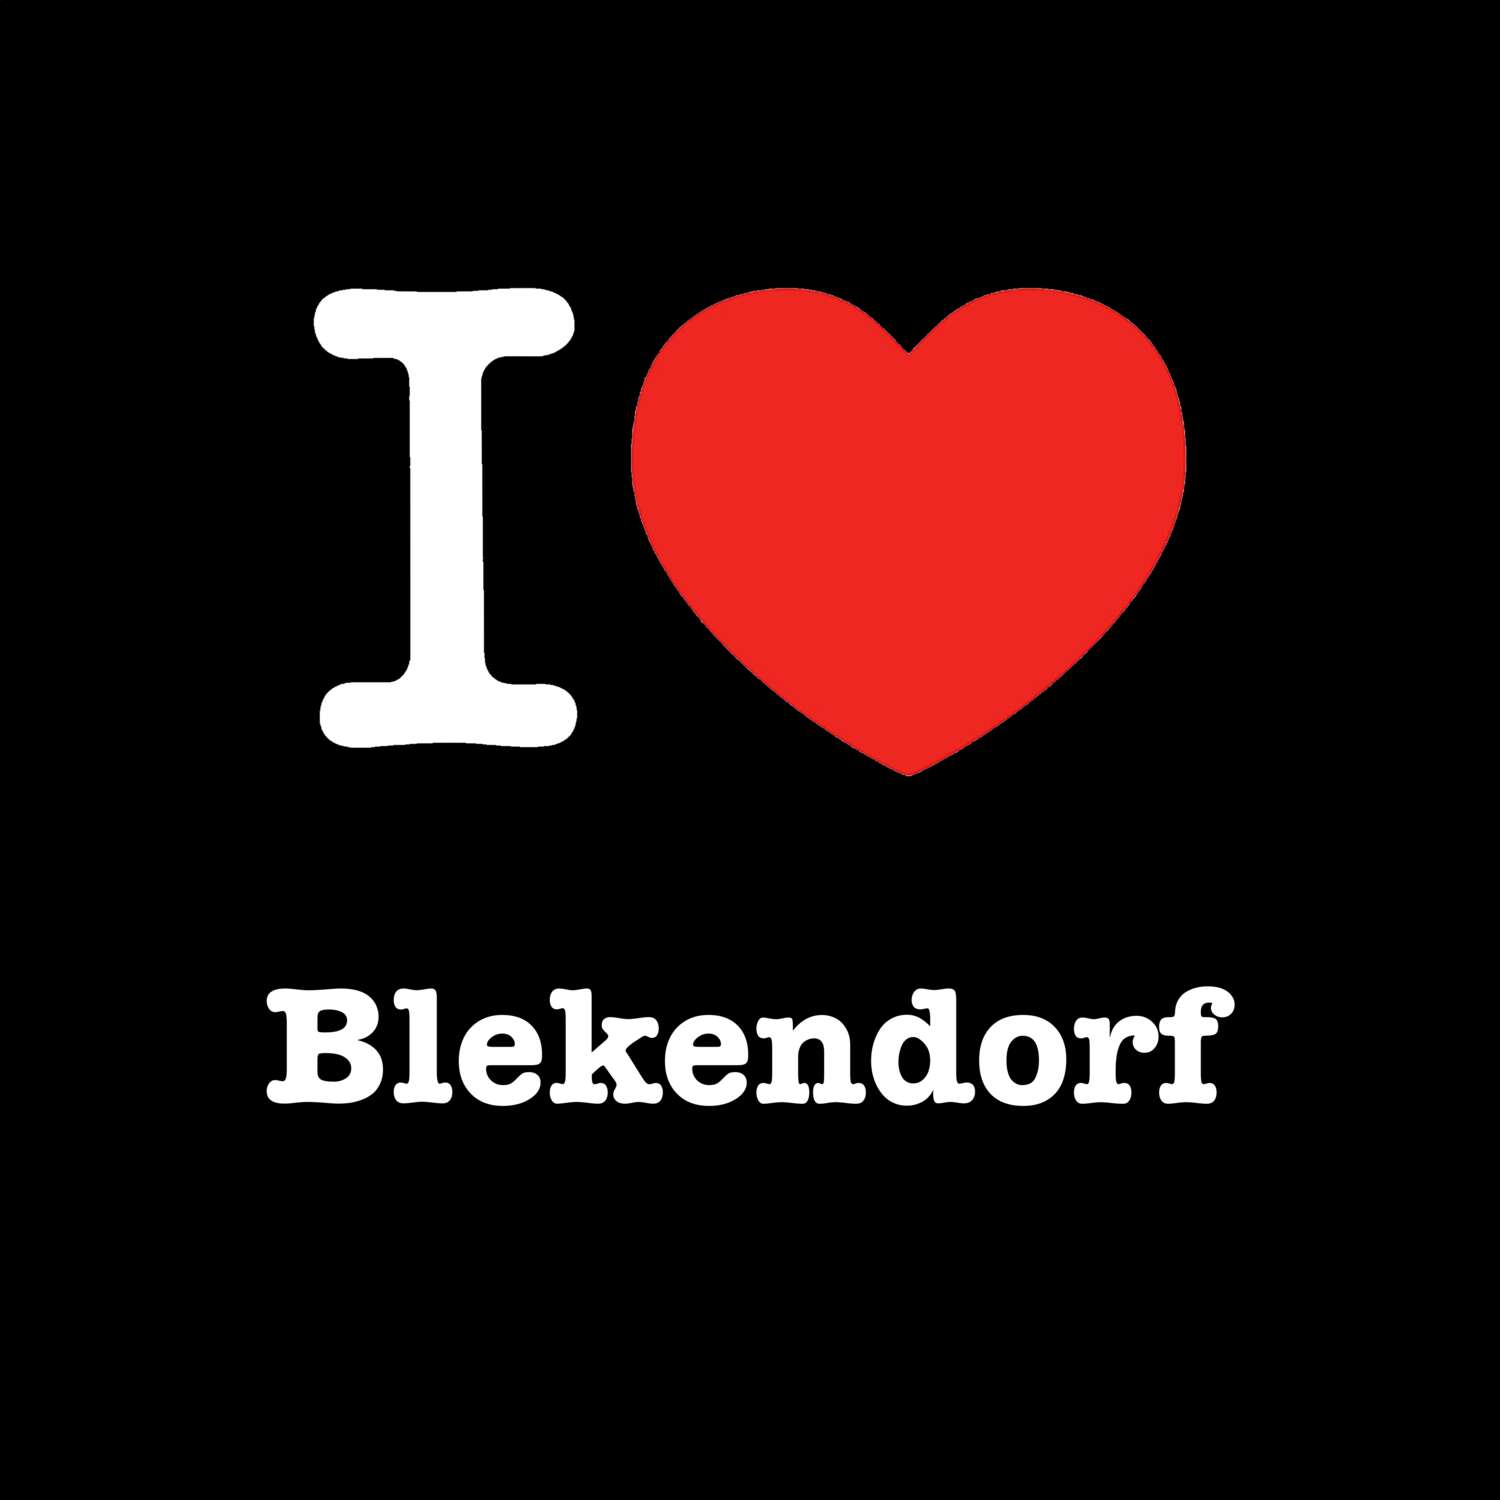 Blekendorf T-Shirt »I love«